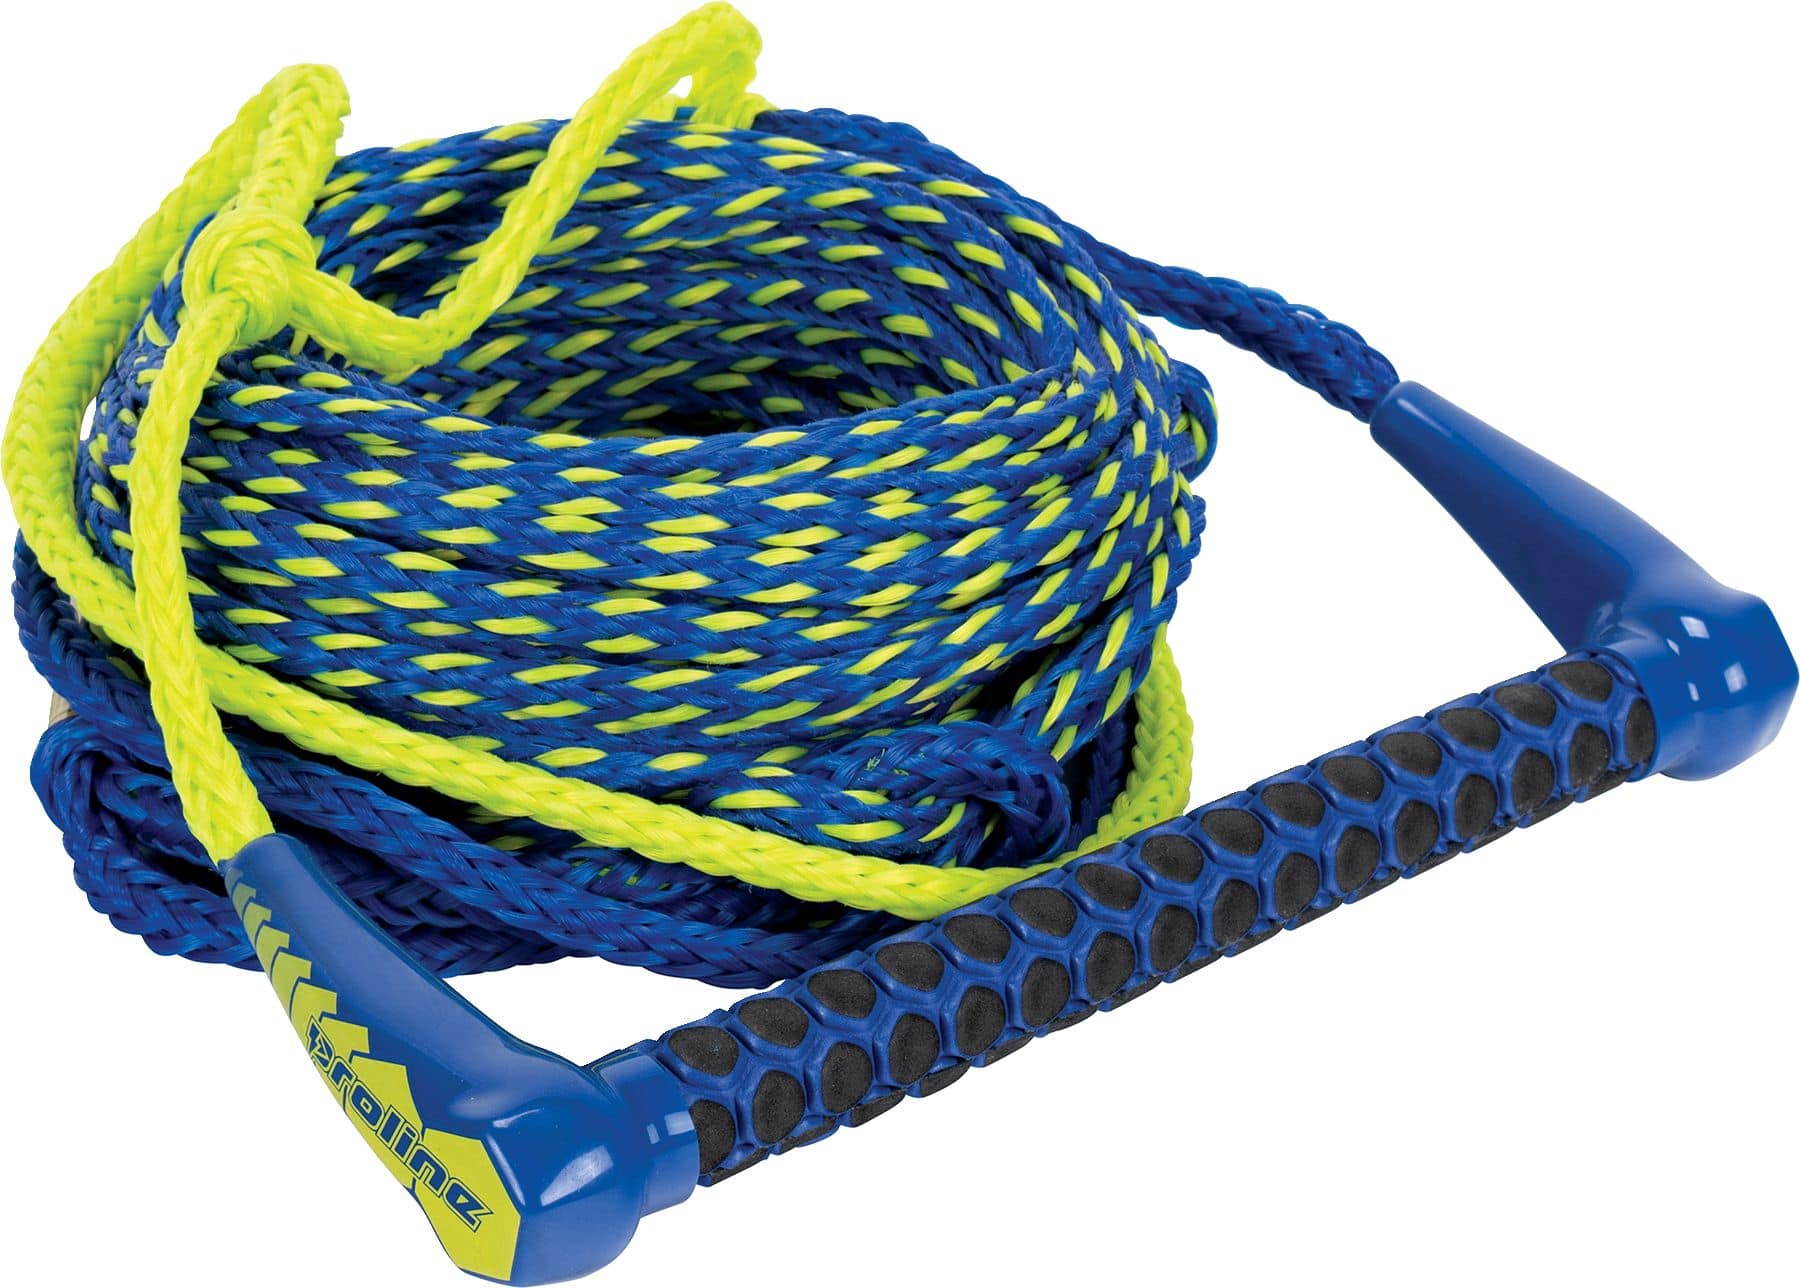 Erickson Blue Tow Rope - Safety Snap Hooks - Braided Nylon Rope